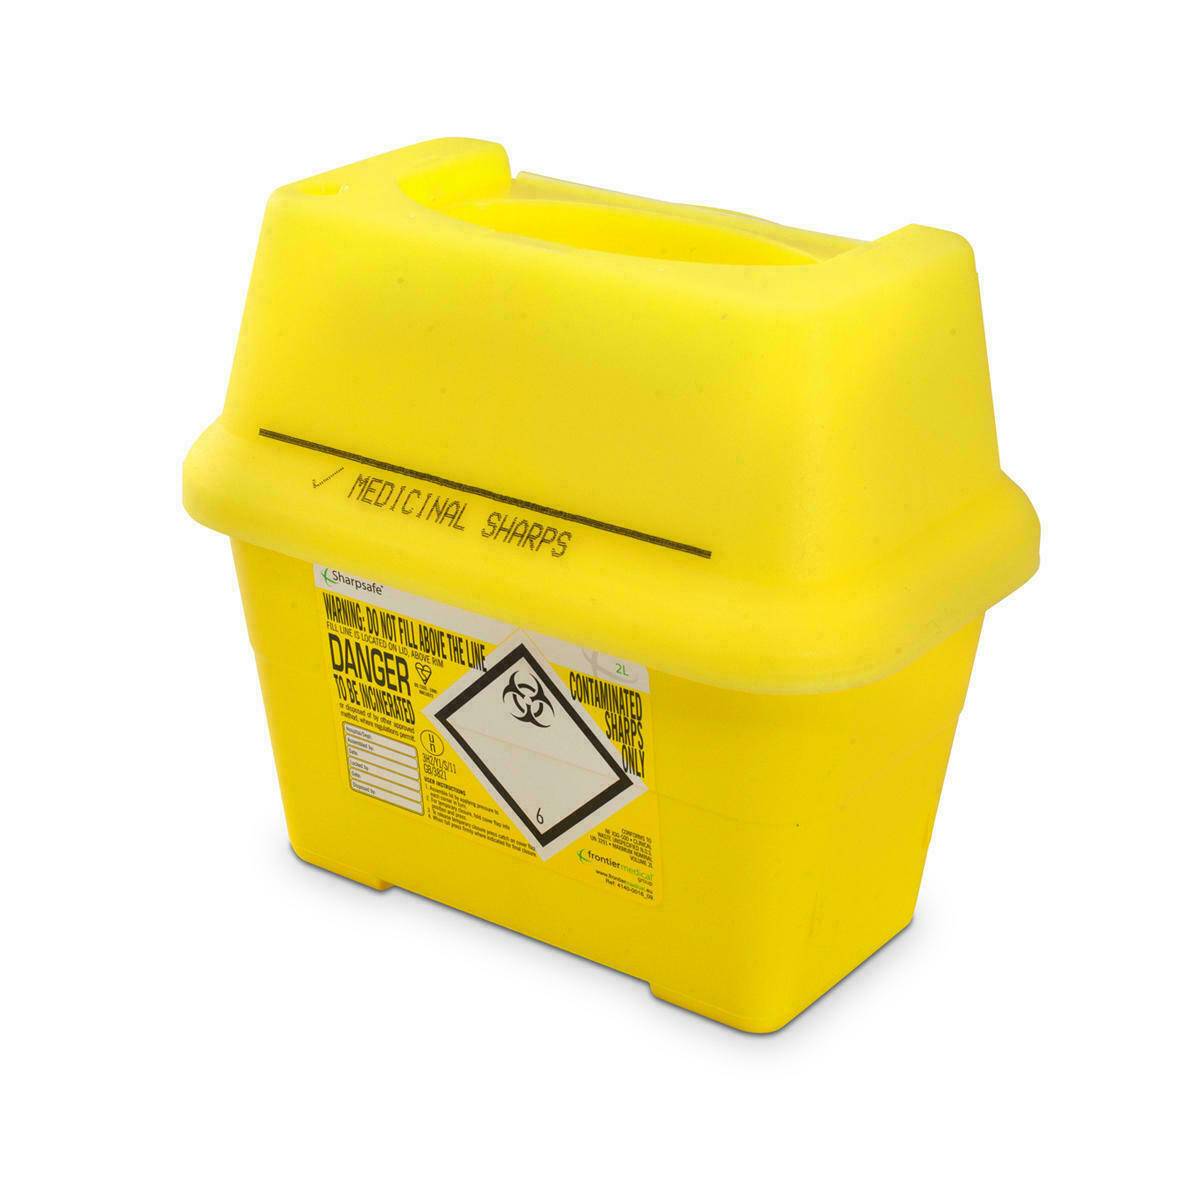 Frontier 2 litre Sharpsafe Yellow sharps bin 4140-0016_25 UKMEDI.CO.UK